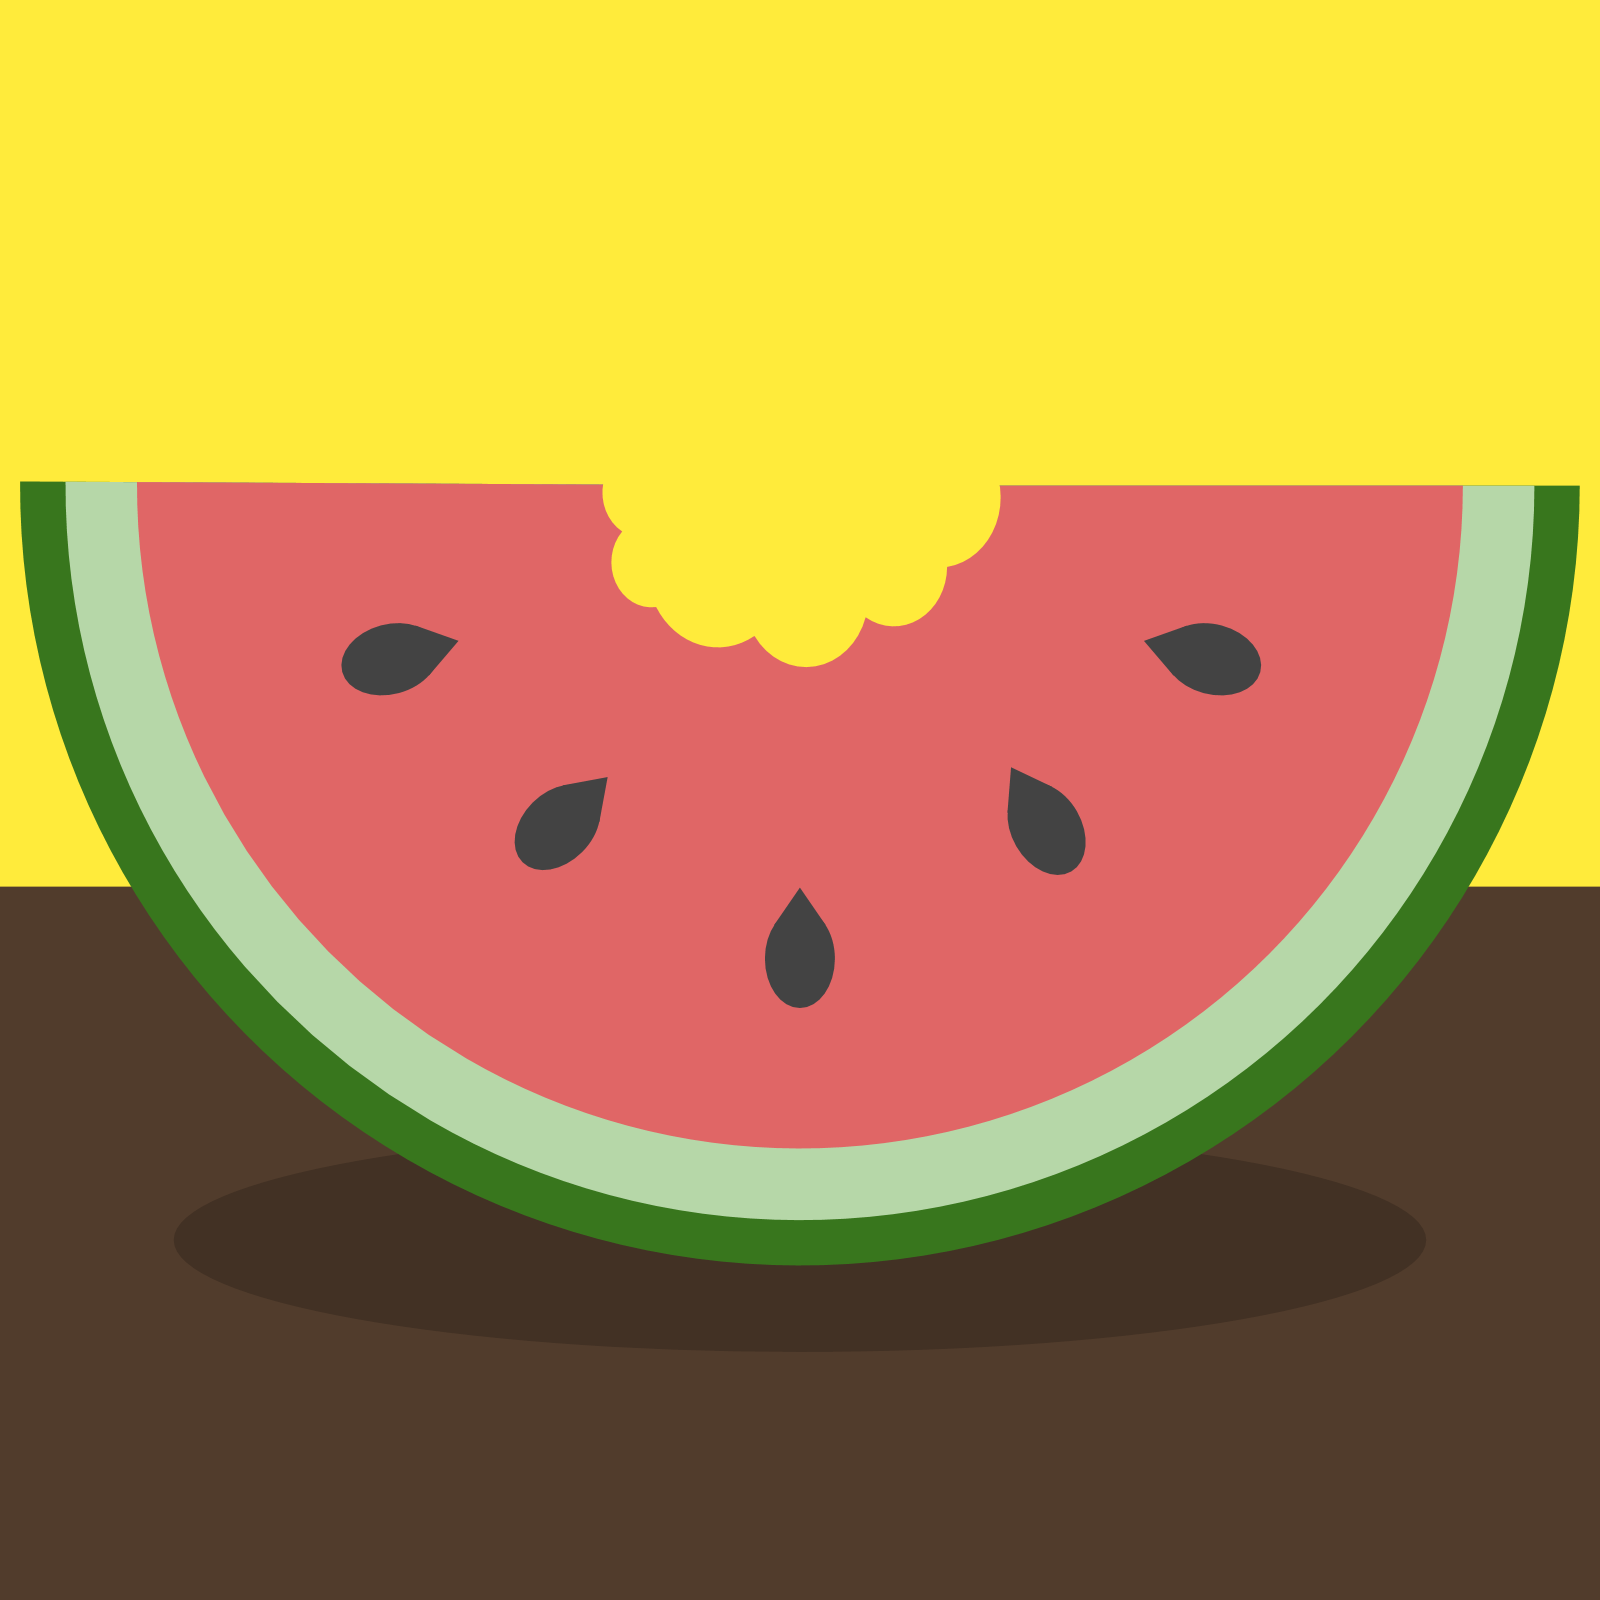 Watermelon slice with a bite